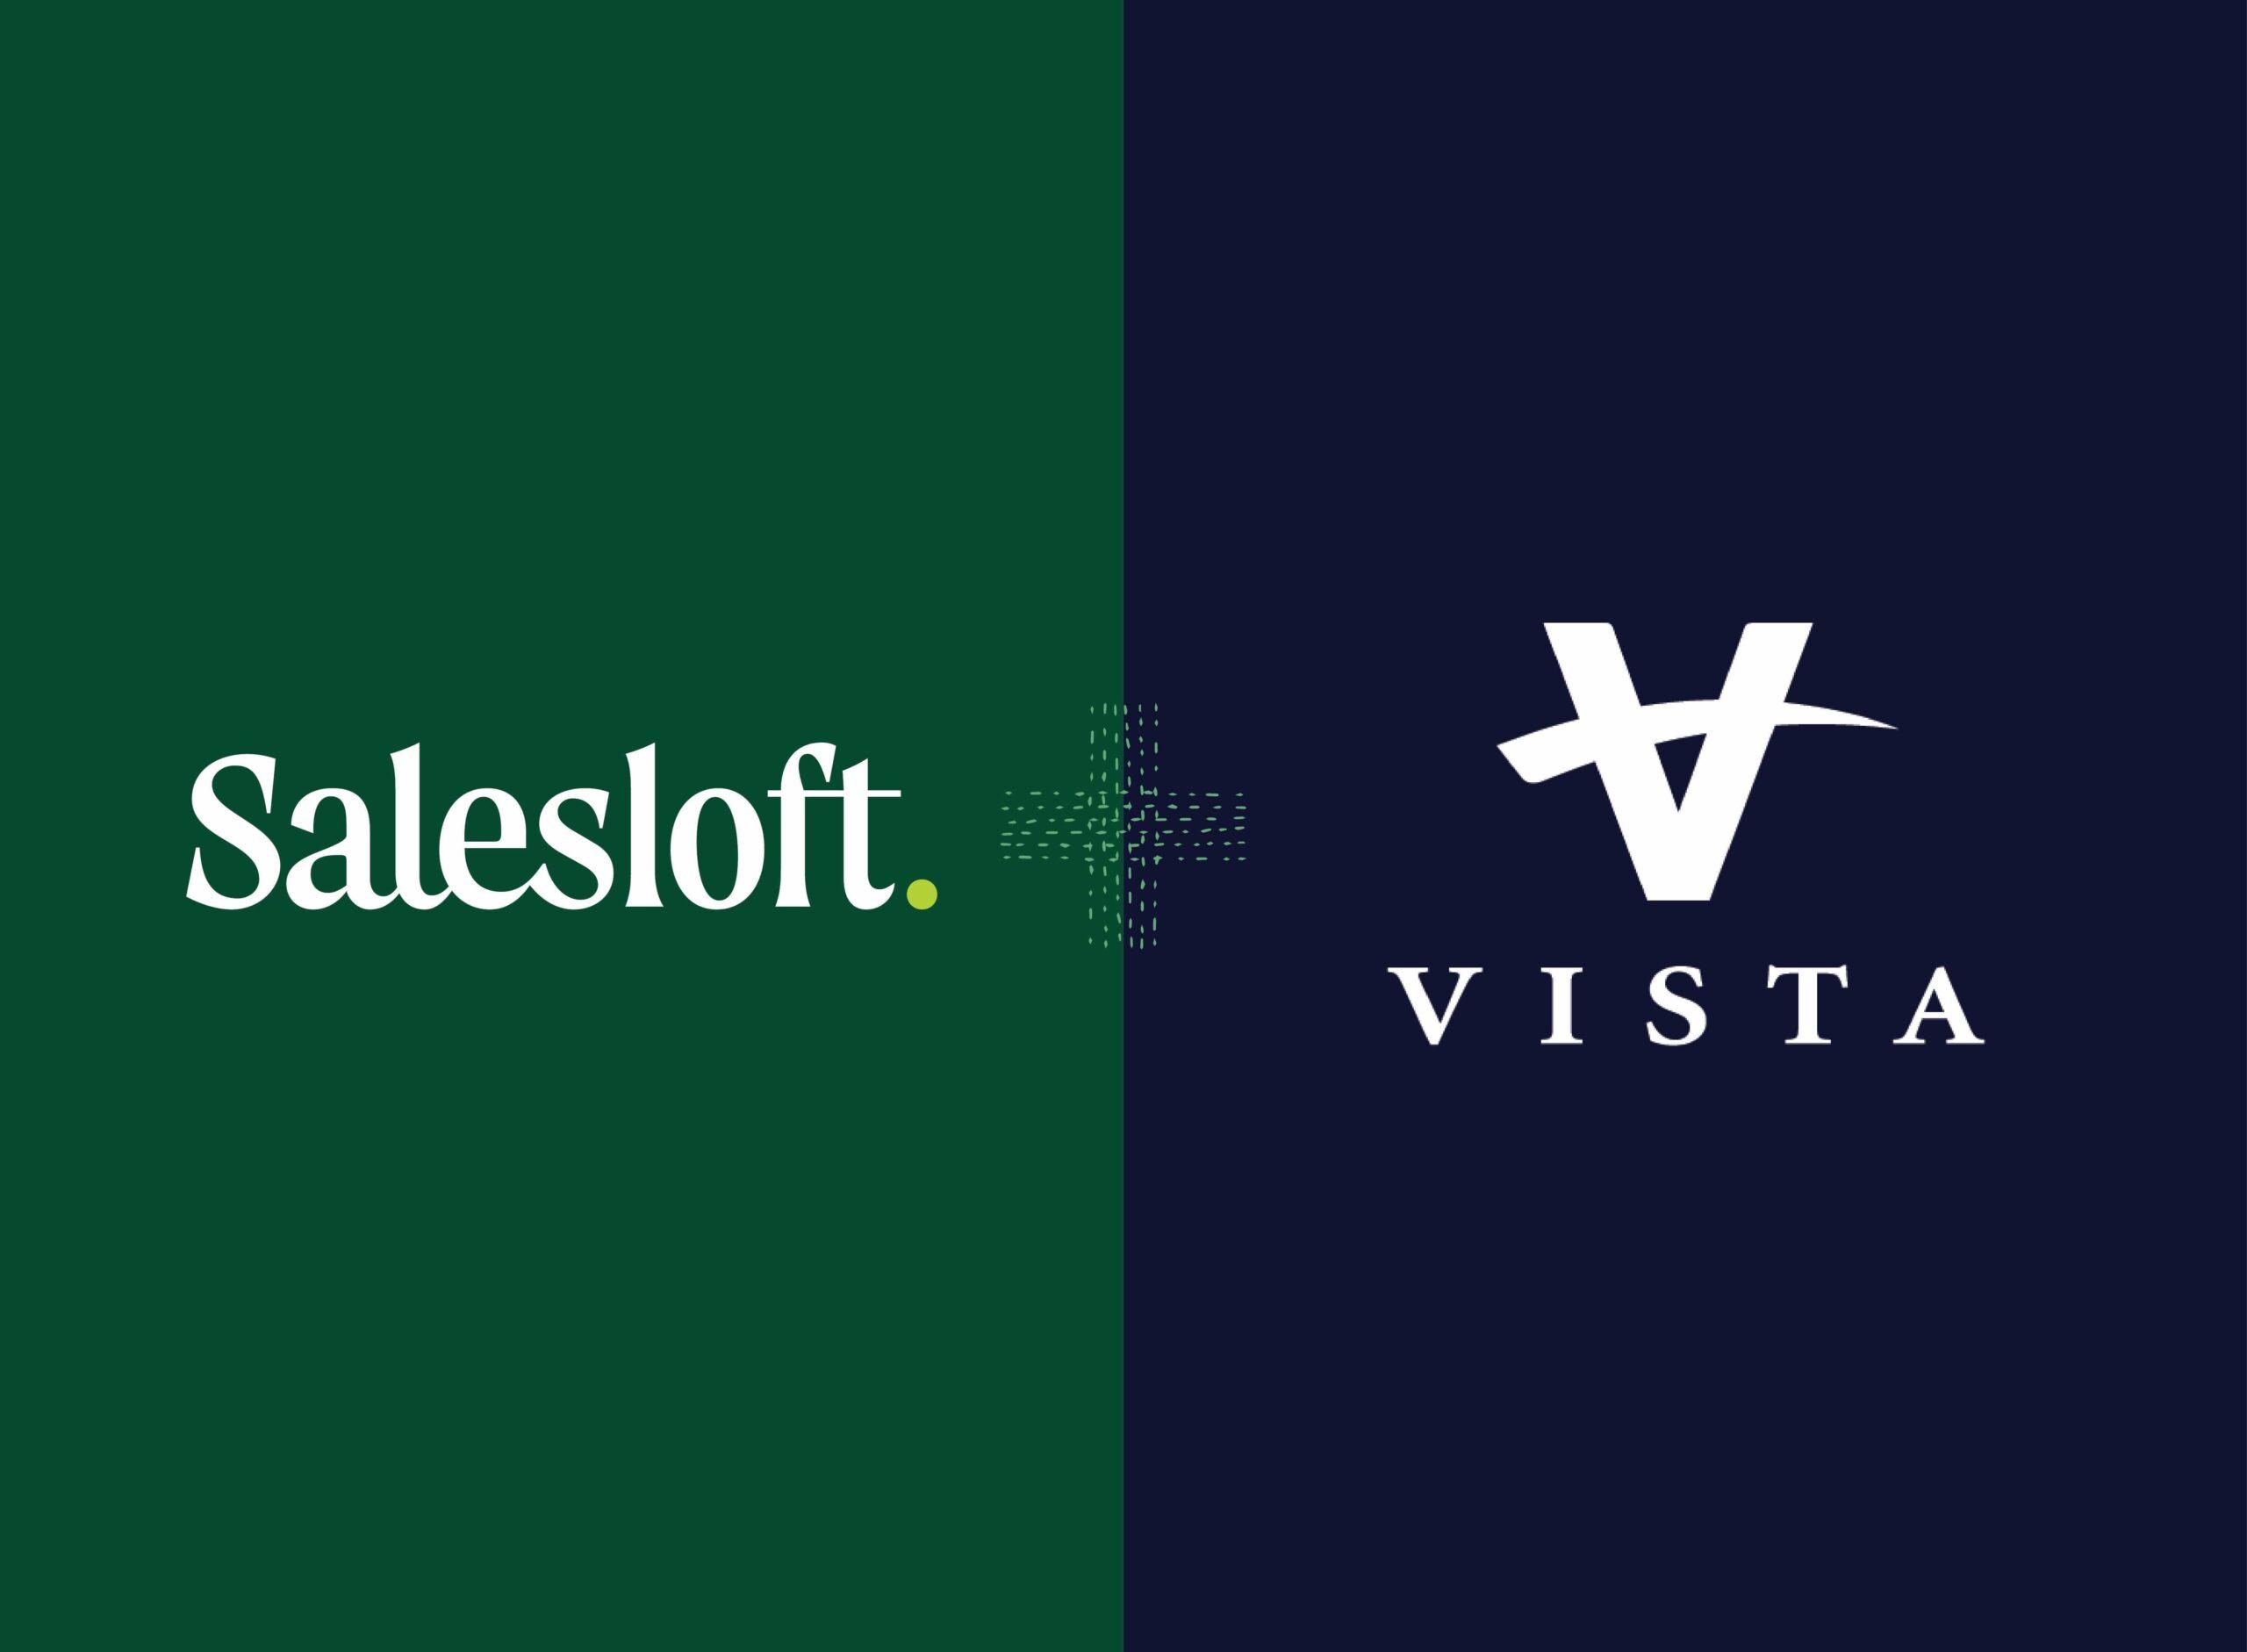 Salesloft and Vista